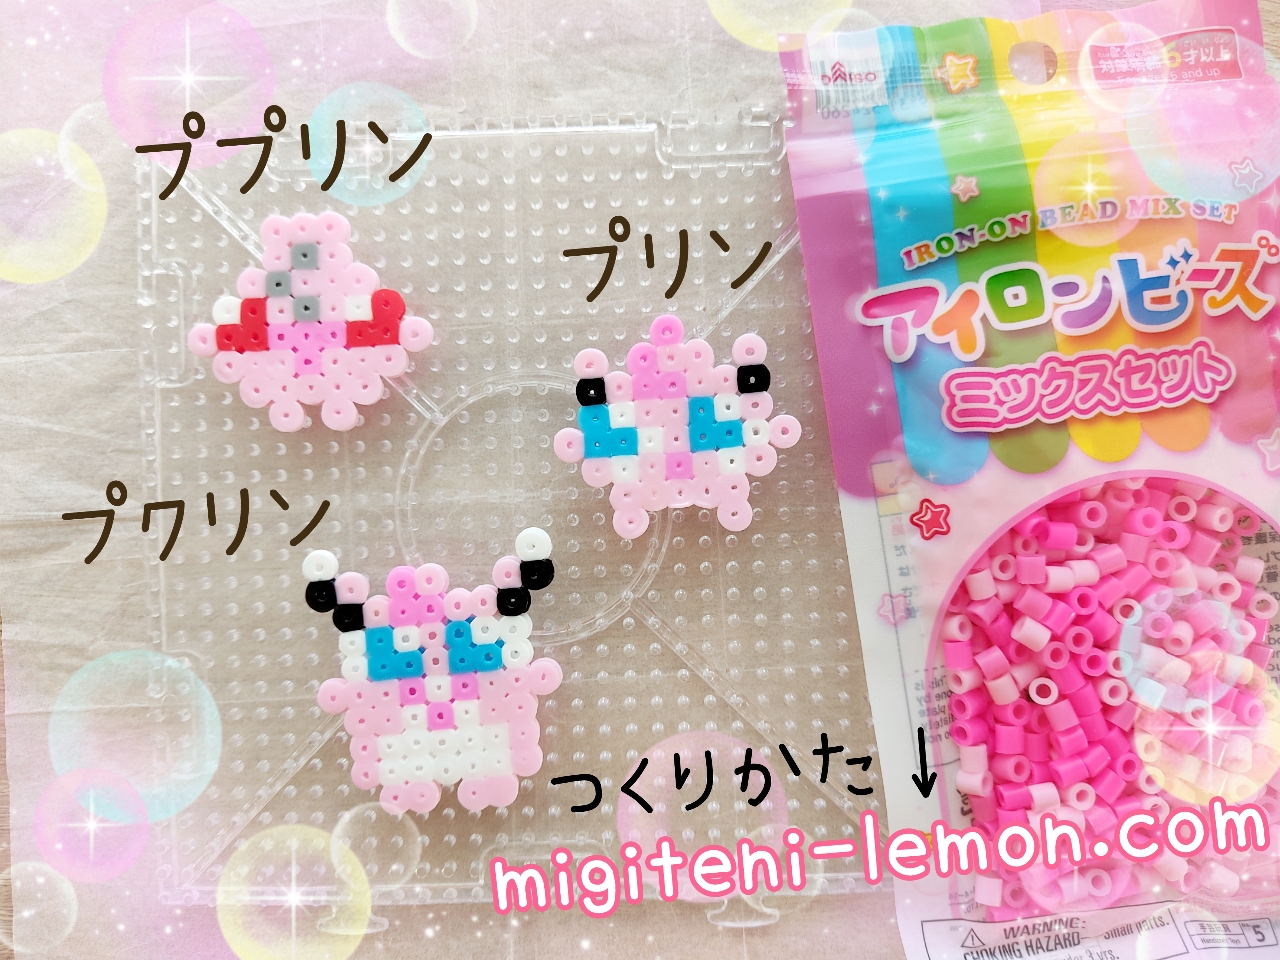 pupurin-igglybuff-purin-jigglypuff-pukurin-wigglytuff-pokemon-handmade-beads